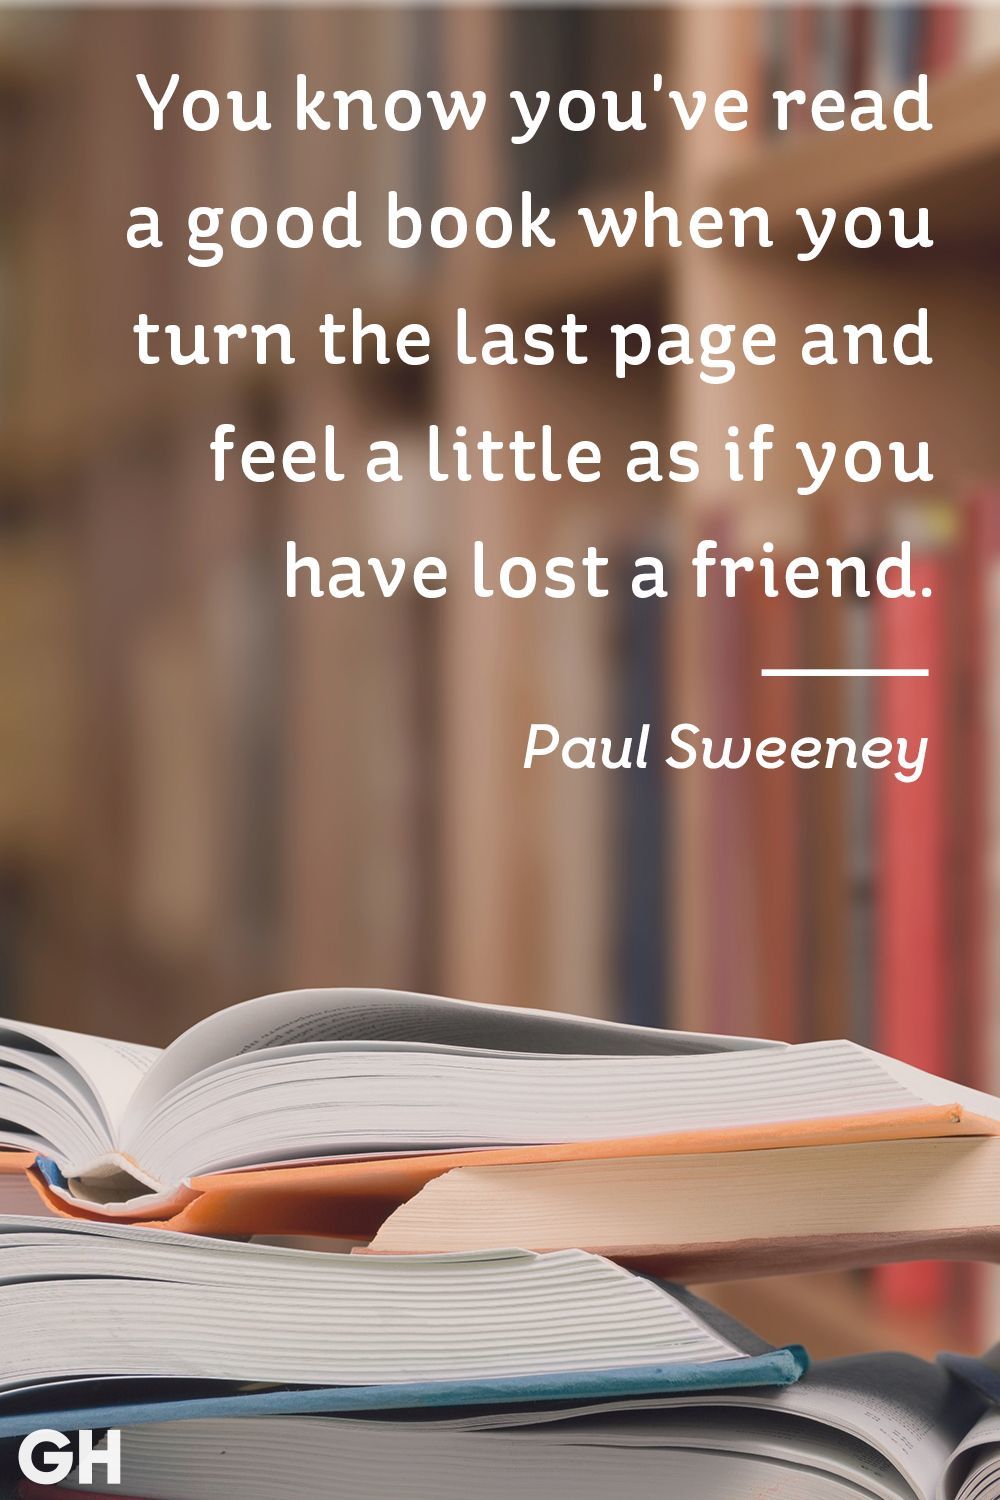 paul sweeney book quote